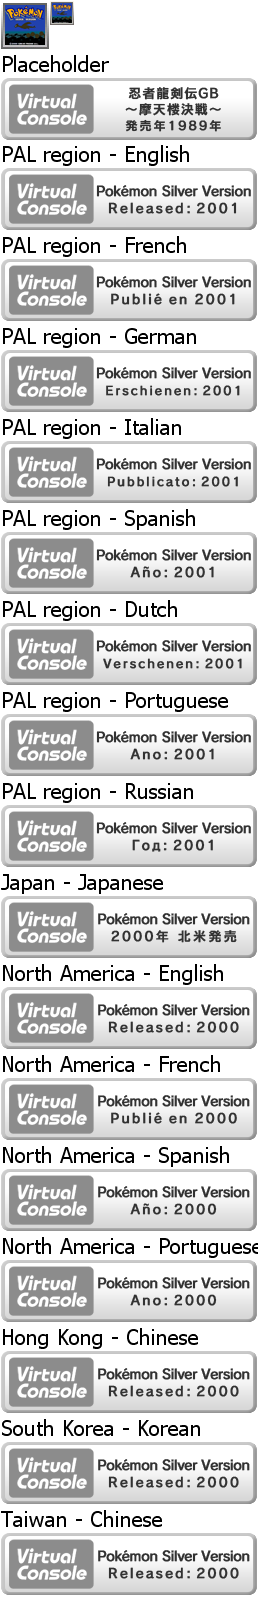 Virtual Console - Pokémon Silver Version